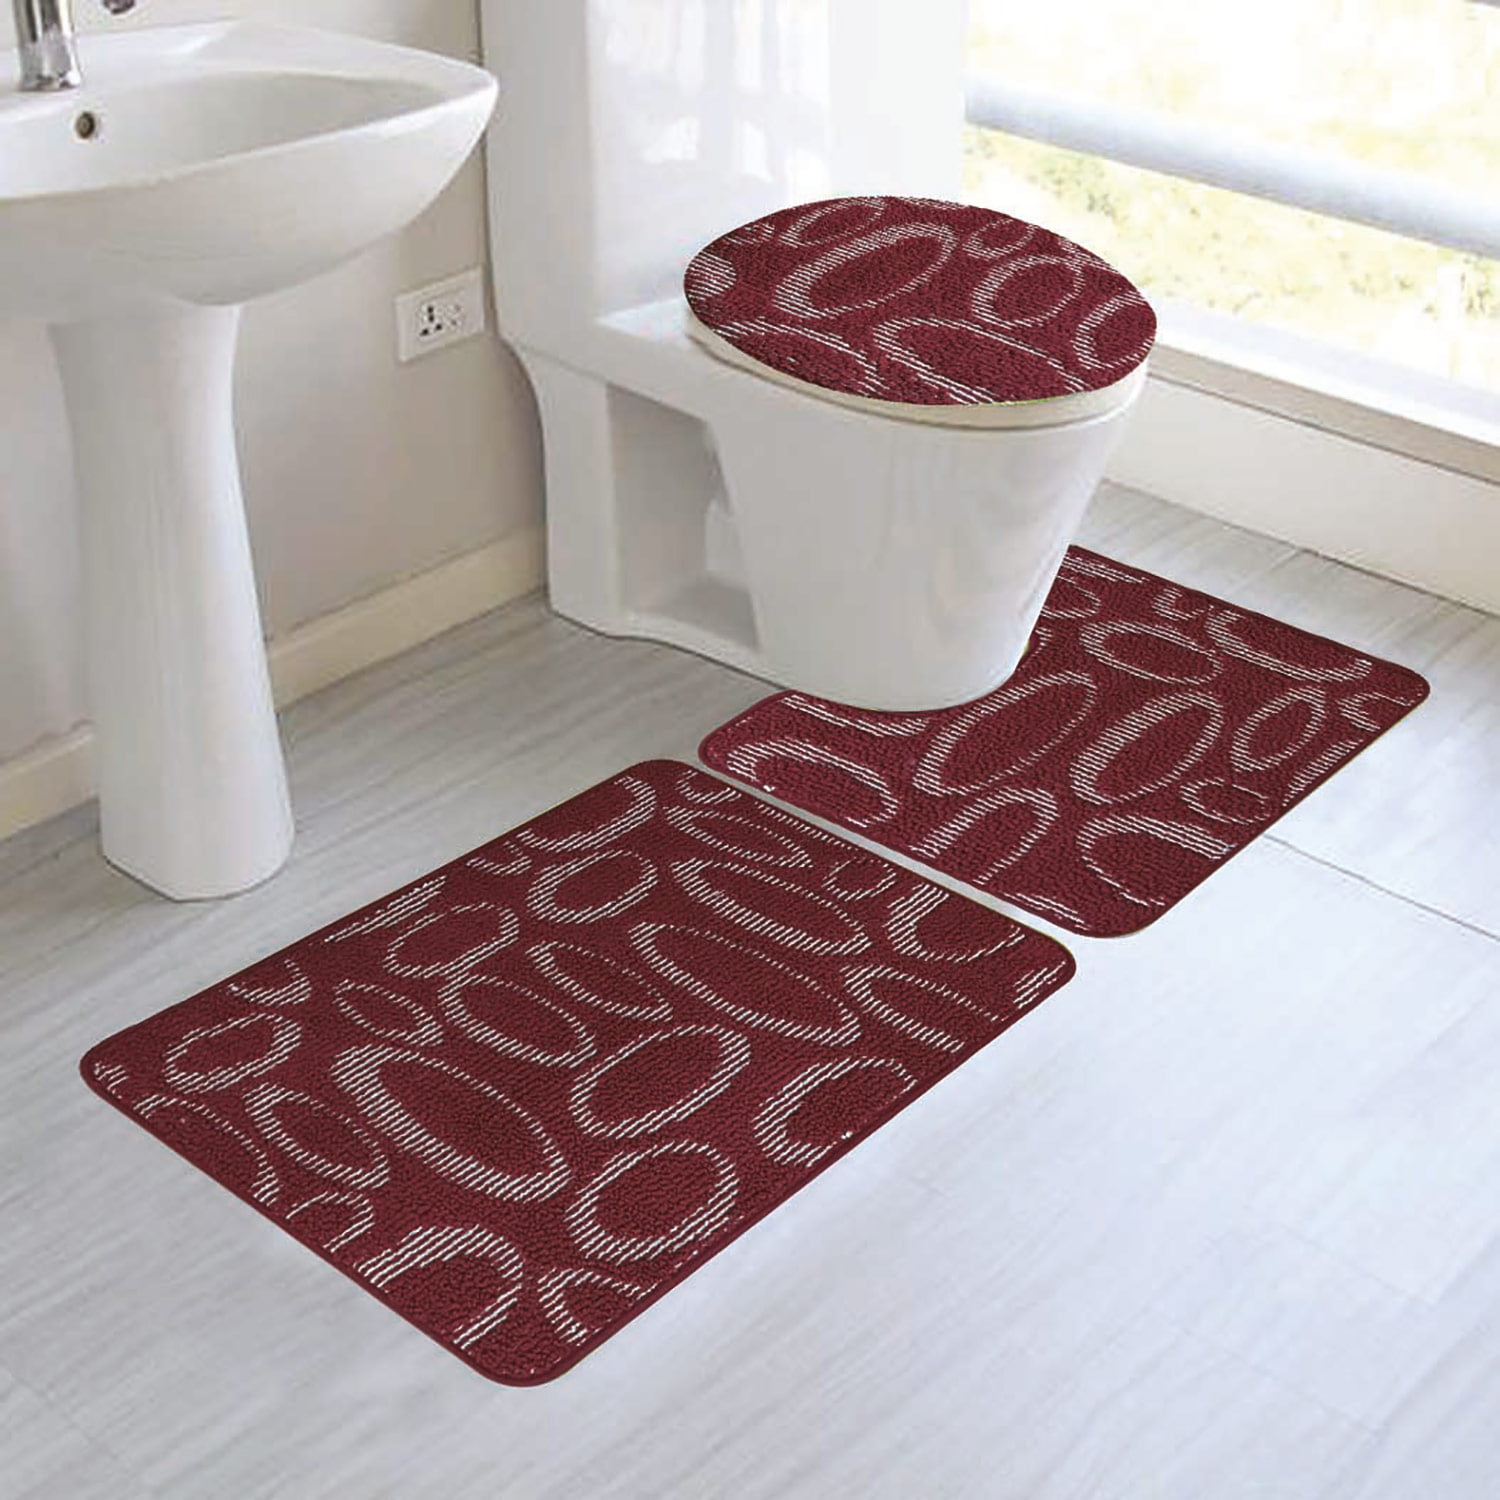 Toilet Rug Sizes - Best Design Idea